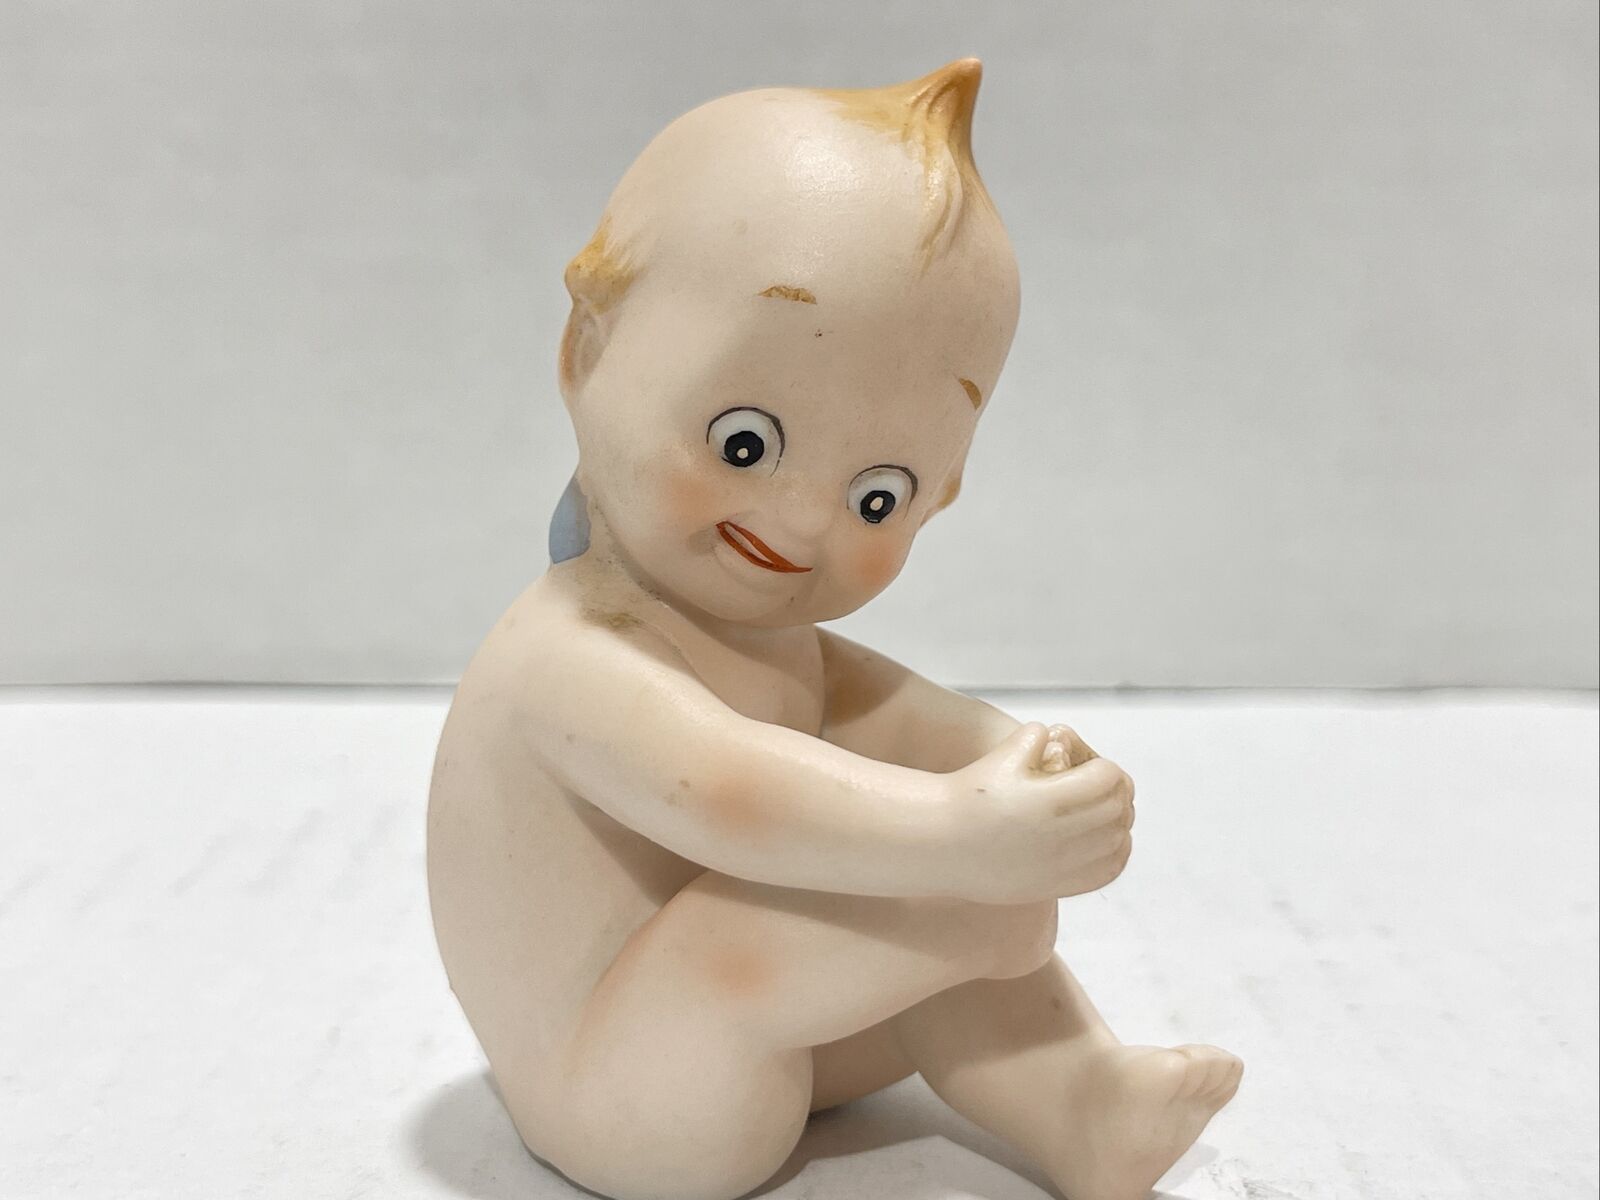 Vintage Lefton Kewpie Baby Playing with Toes Porcelain Bisque Figurine - KW913N